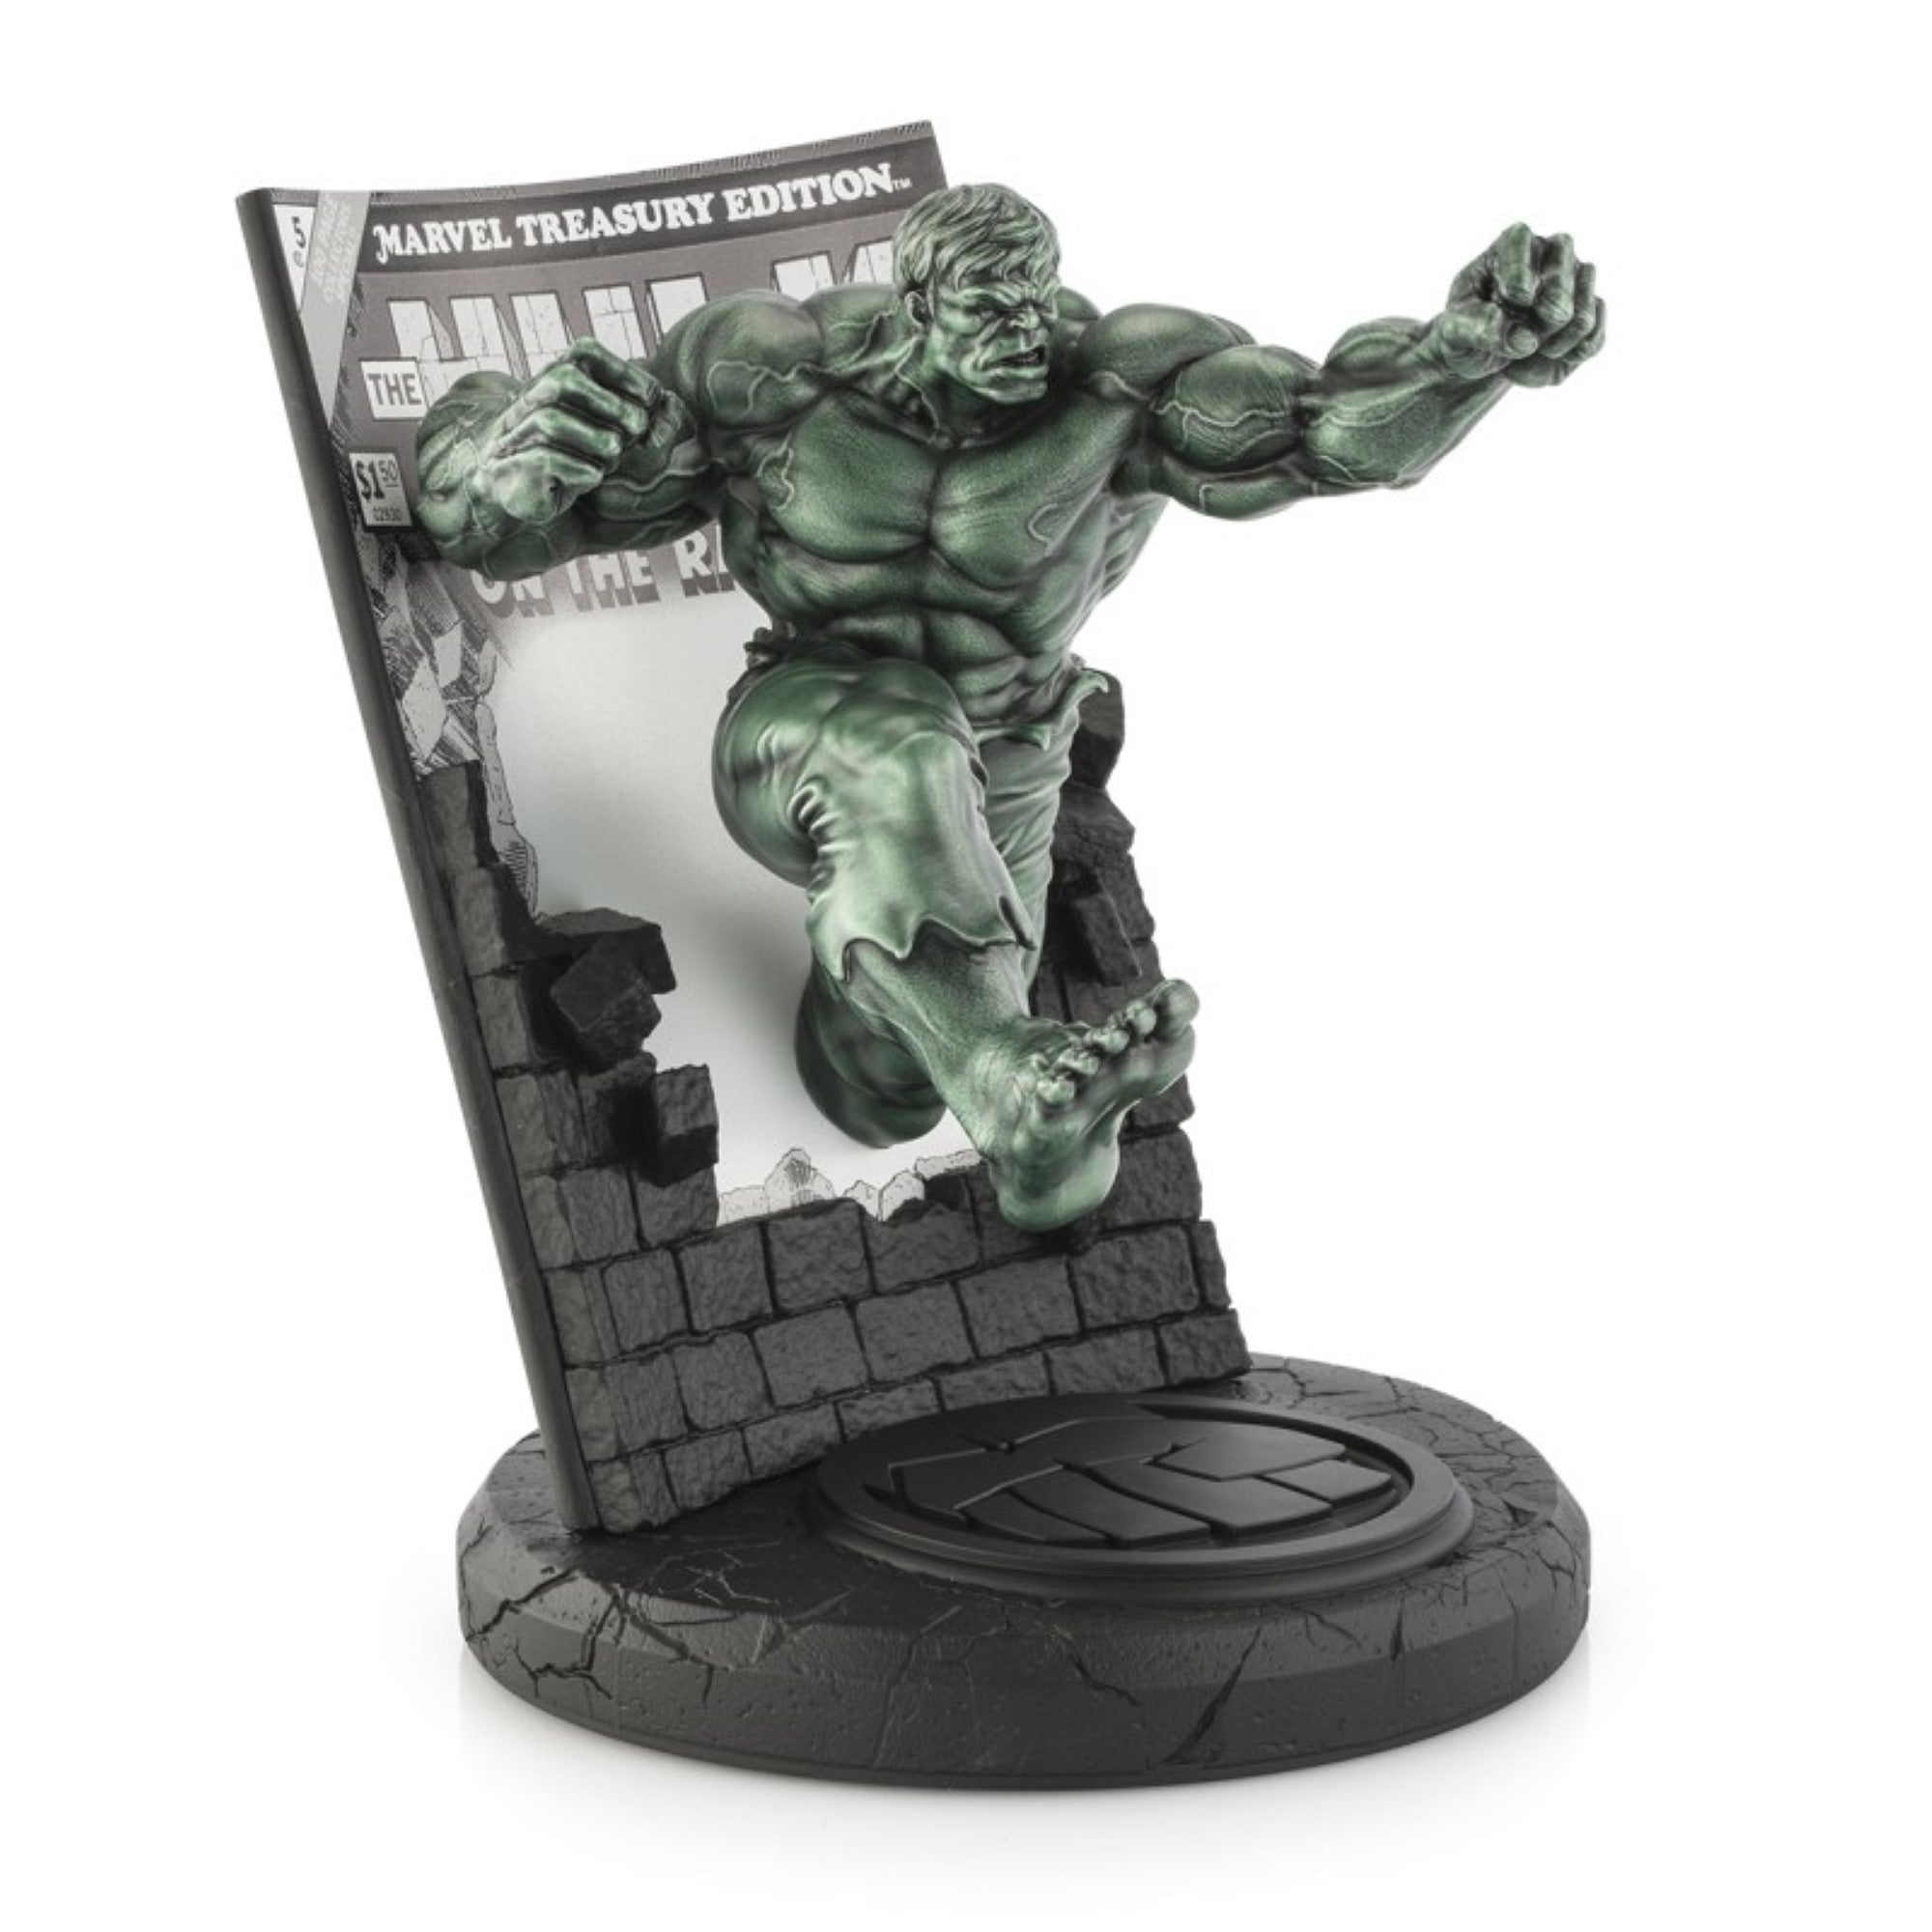 Marvel By Royal Selangor 0179018C04 Limited Edition Green Hulk Marvel Treasury Edition Figurine